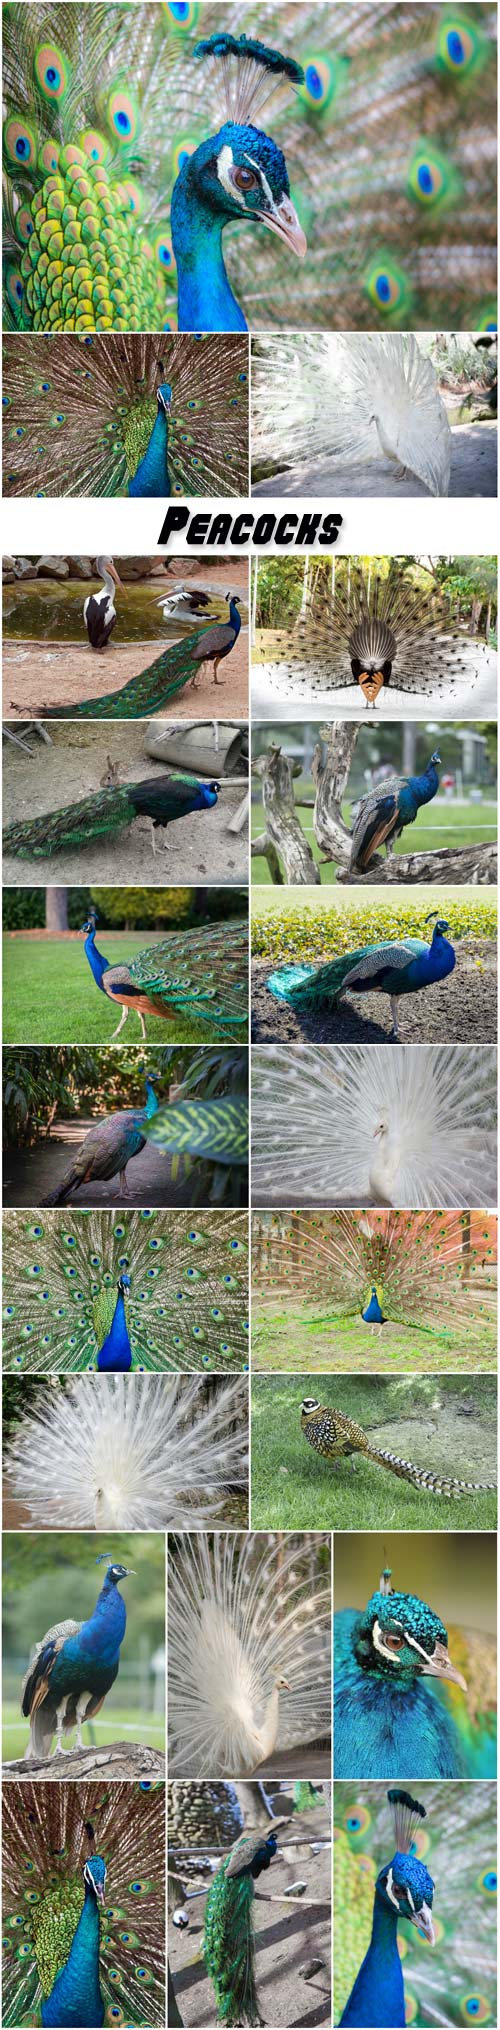 Peacocks, exotic bird